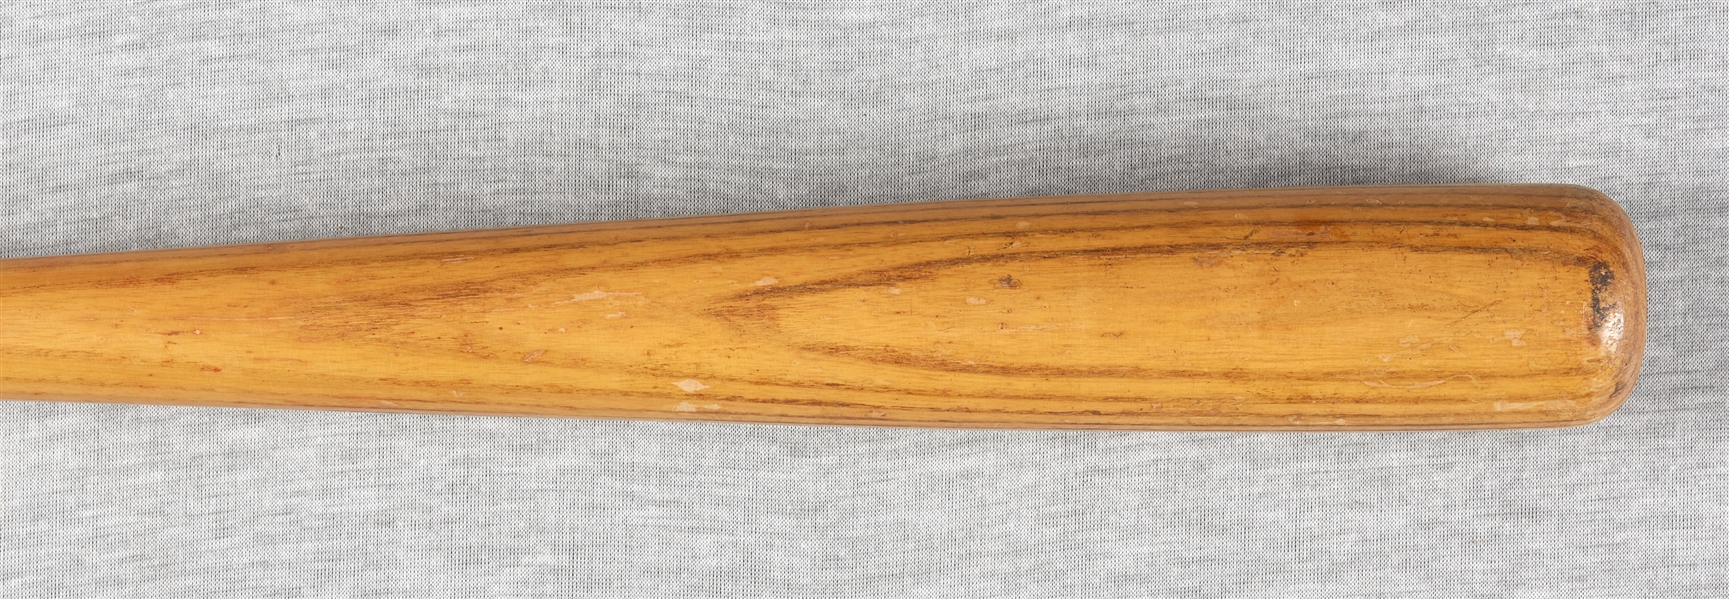 Curt Flood 1961-63 Game-Used Adirondack Bat (PSA/DNA GU 9.5)